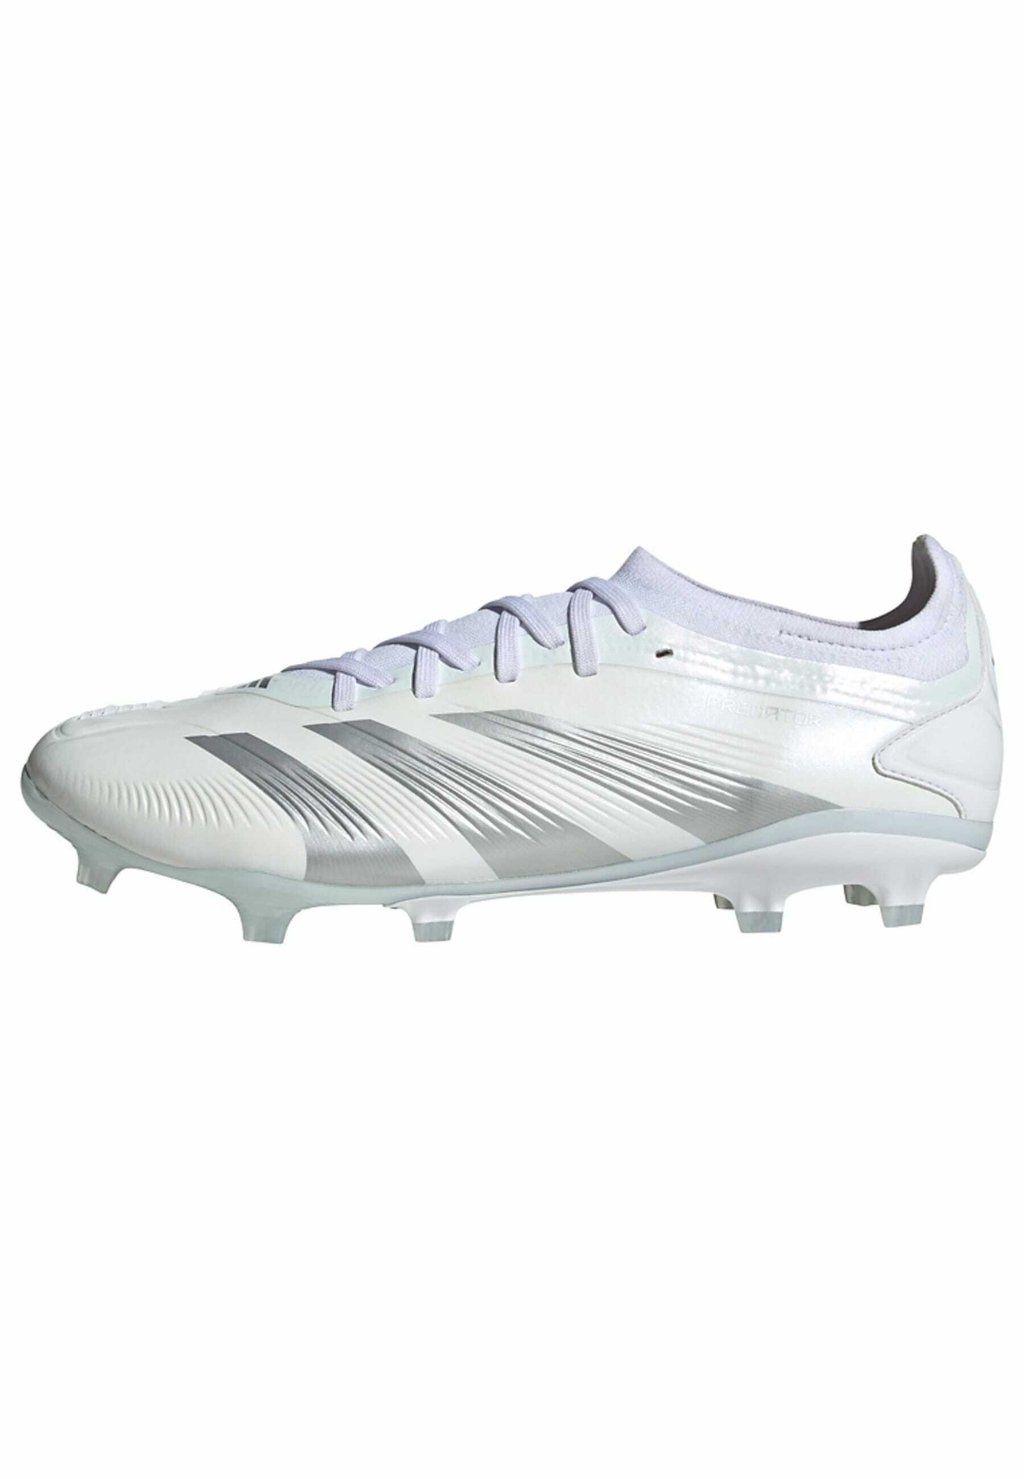 футбольные бутсы с шипами Predator Pro Fg Adidas, цвет cloud white silver metallic cloud white 8008 cloud edition deskphone